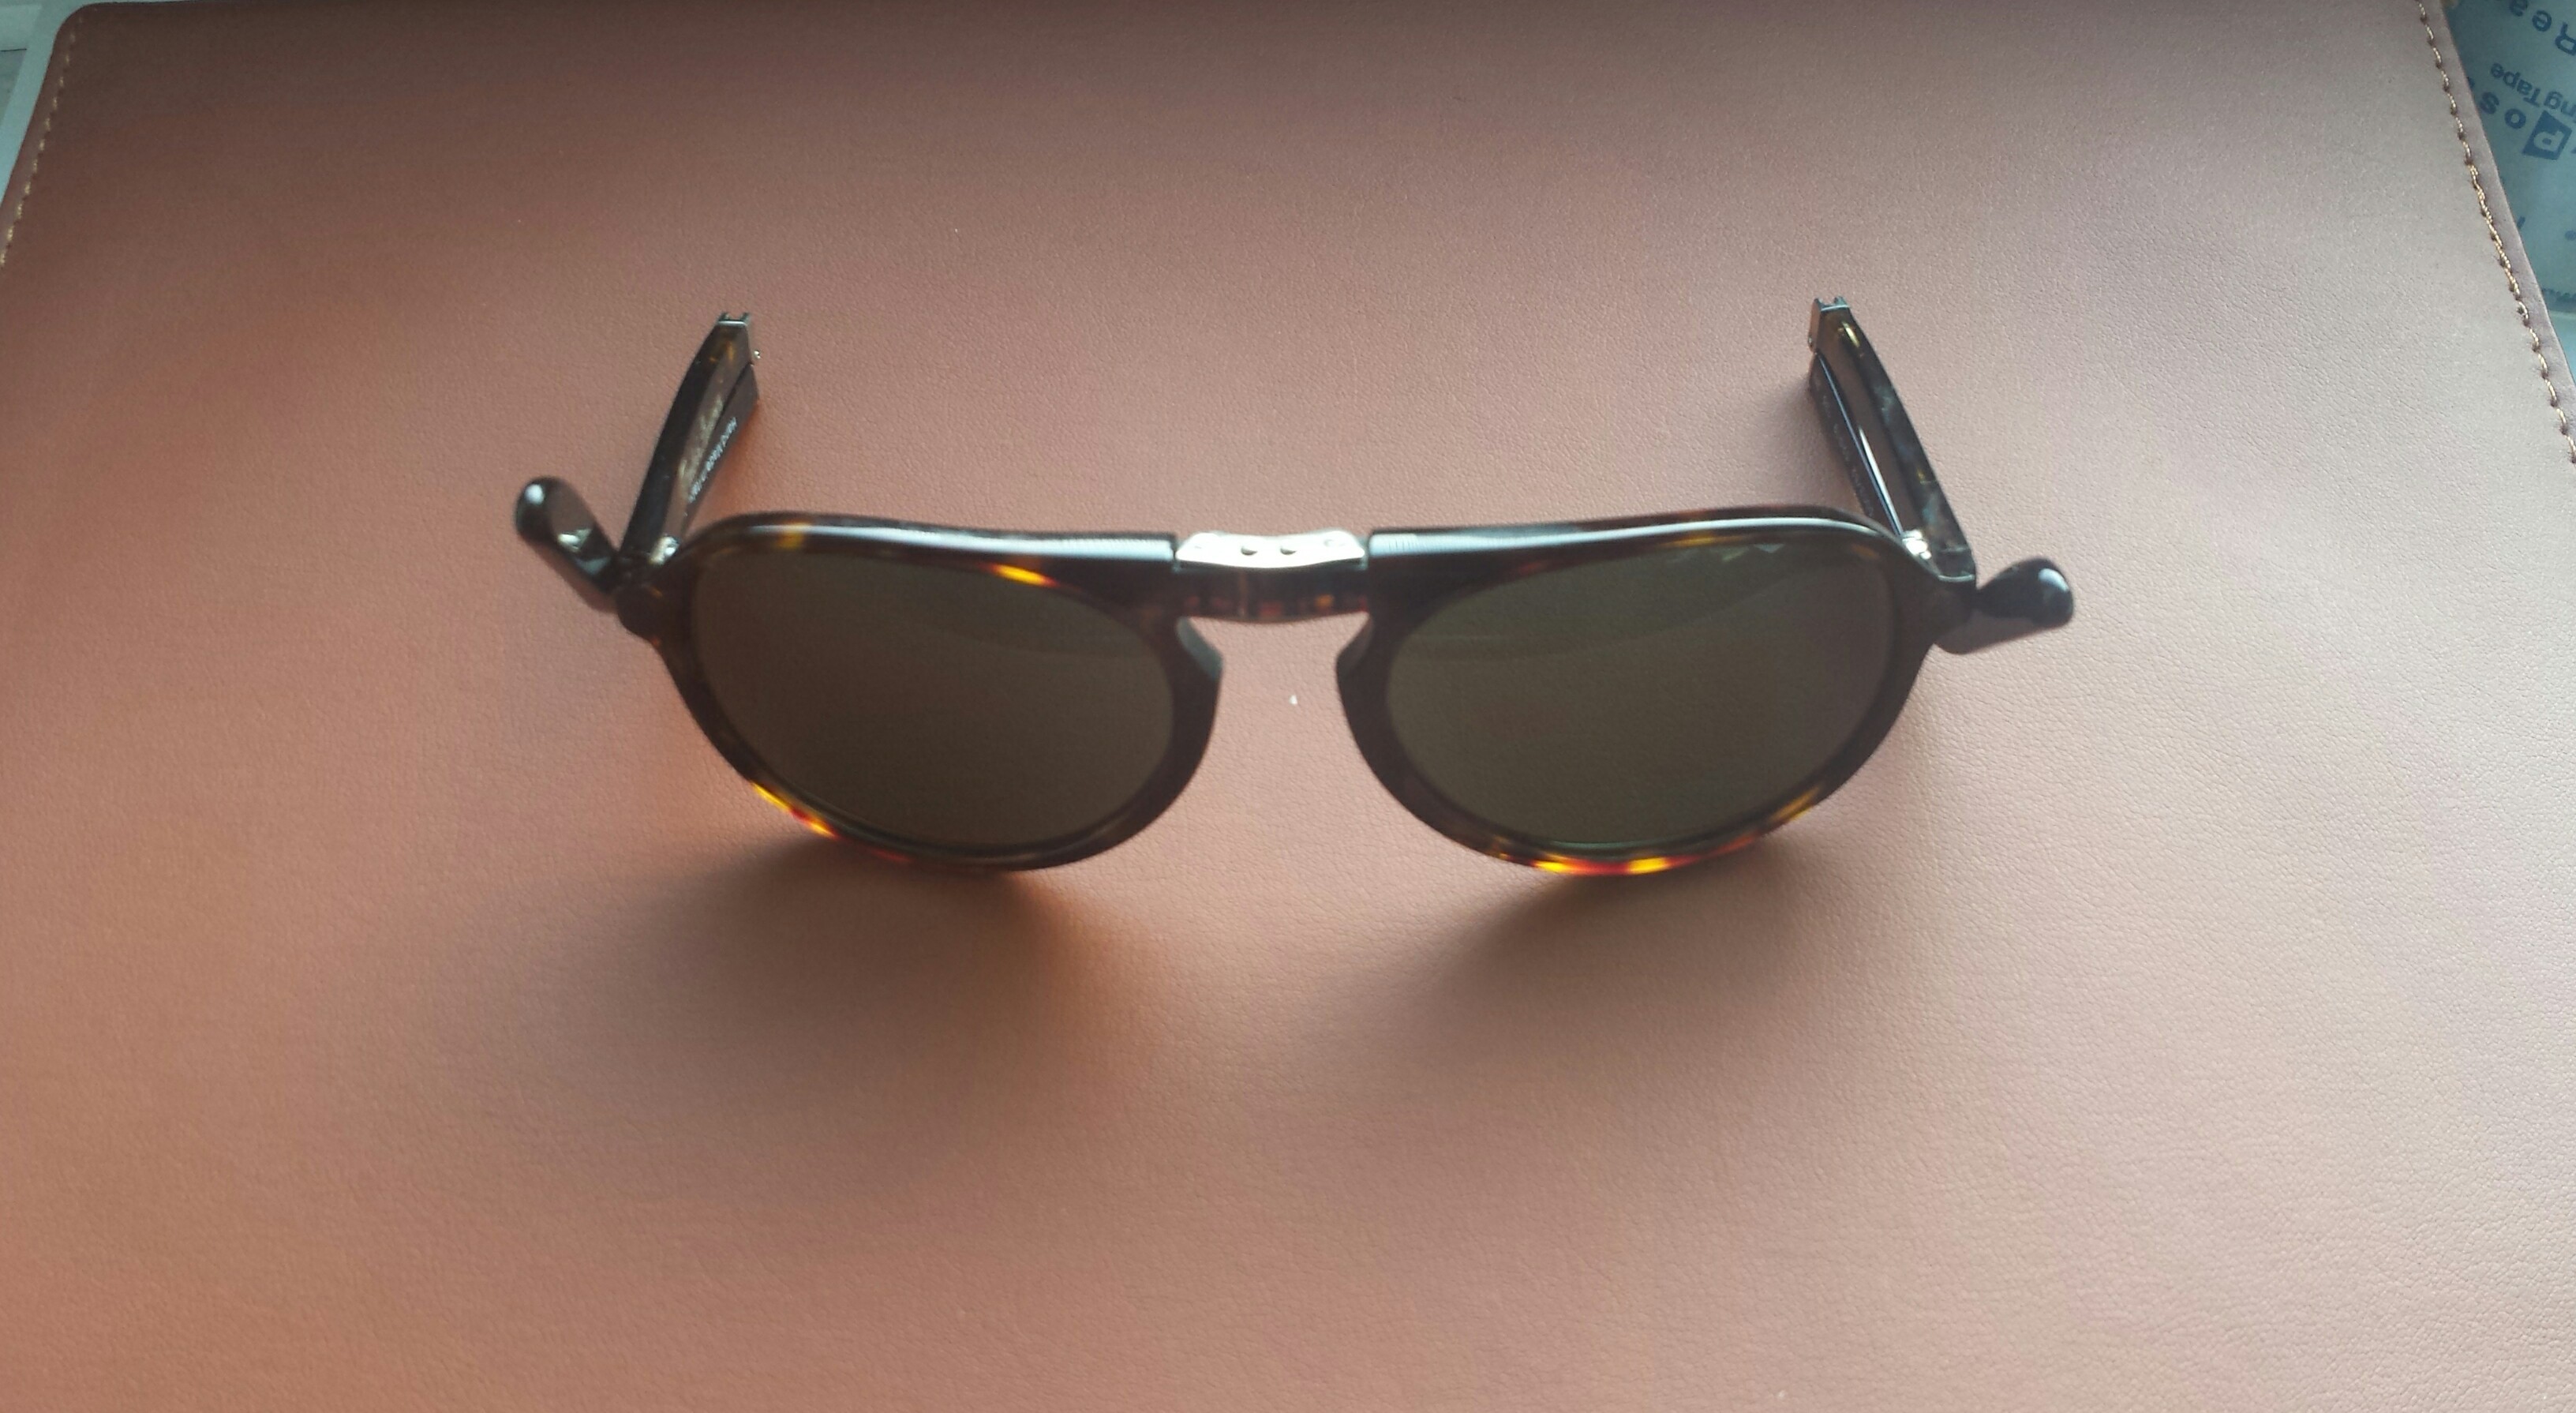 Persol Megathread: Persol Sunglasses-Brand New various colors | Styleforum